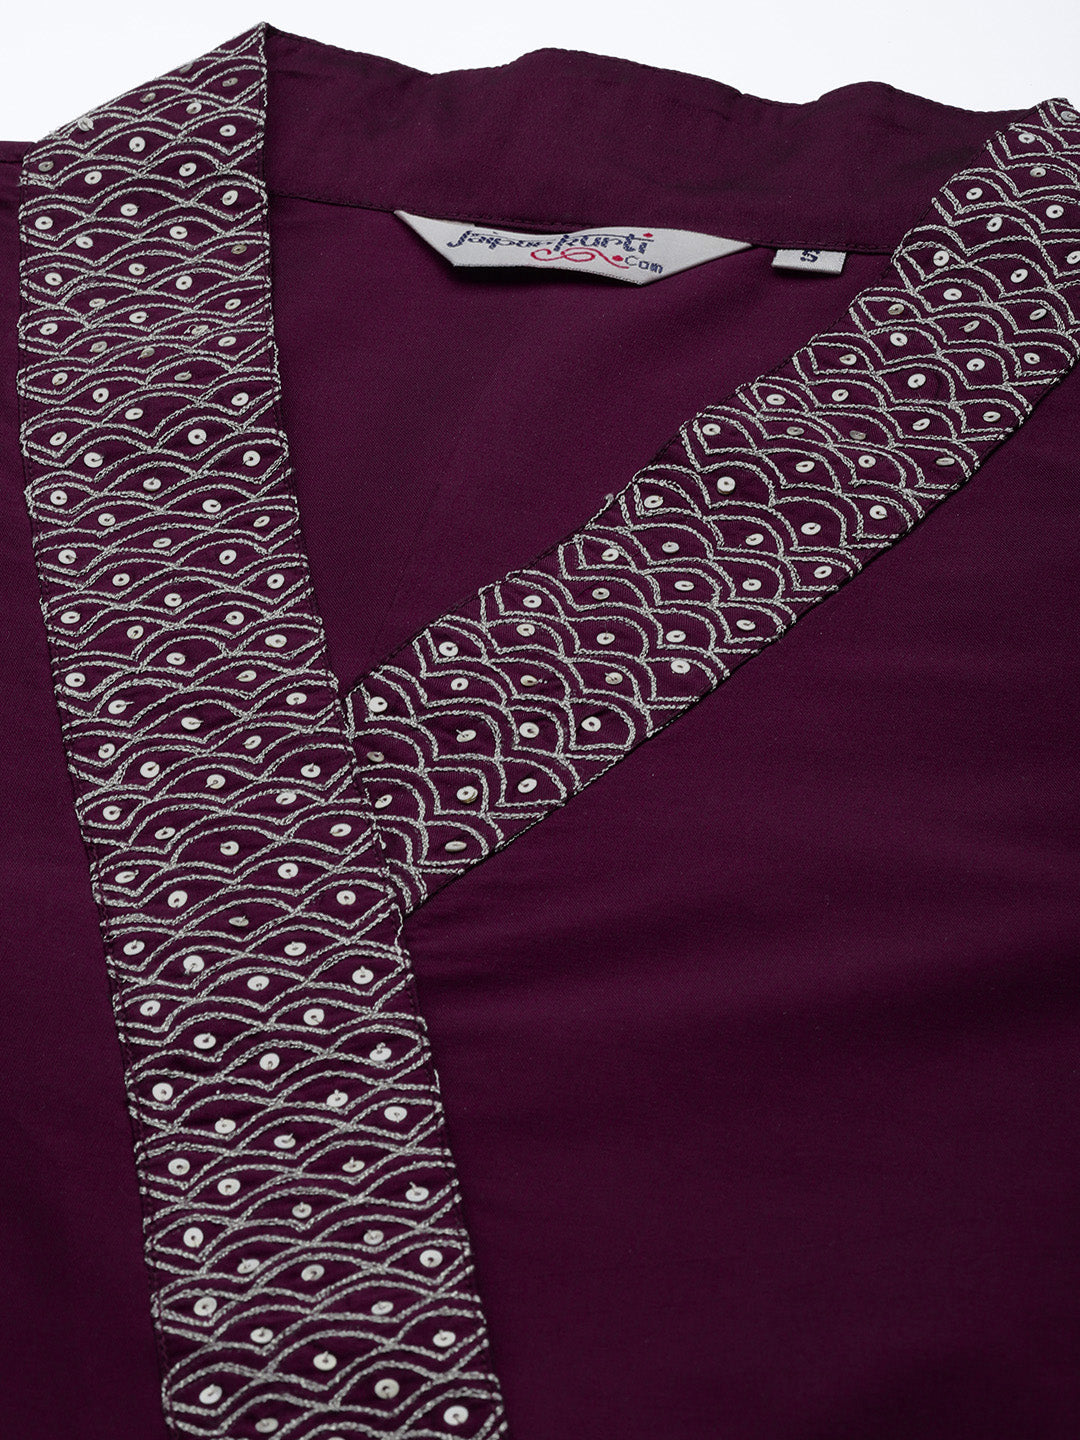 Purple Silk Blend Angrakha Style A-Line Embroidered Kurta